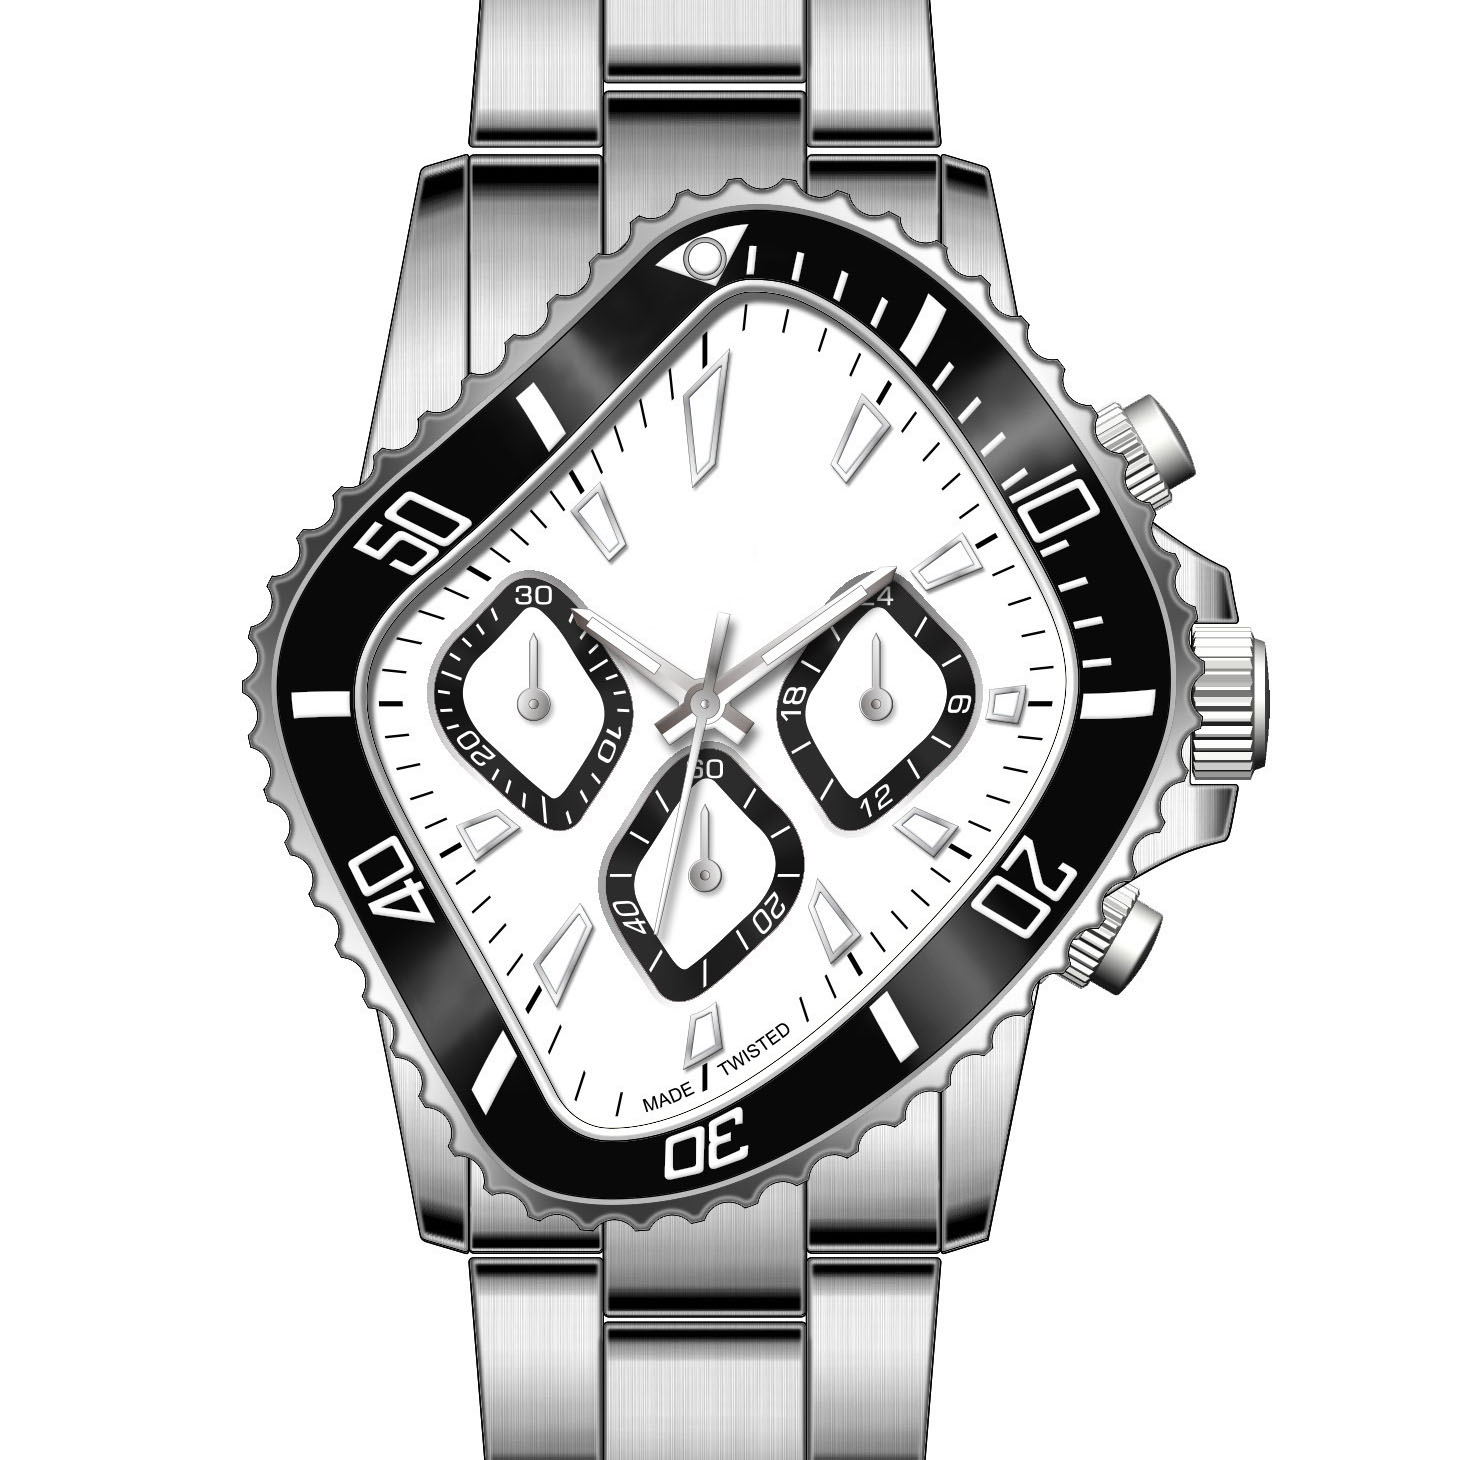 OEM Small MOQ Customize Brand New Design Crashed Submariner Quartz Watches